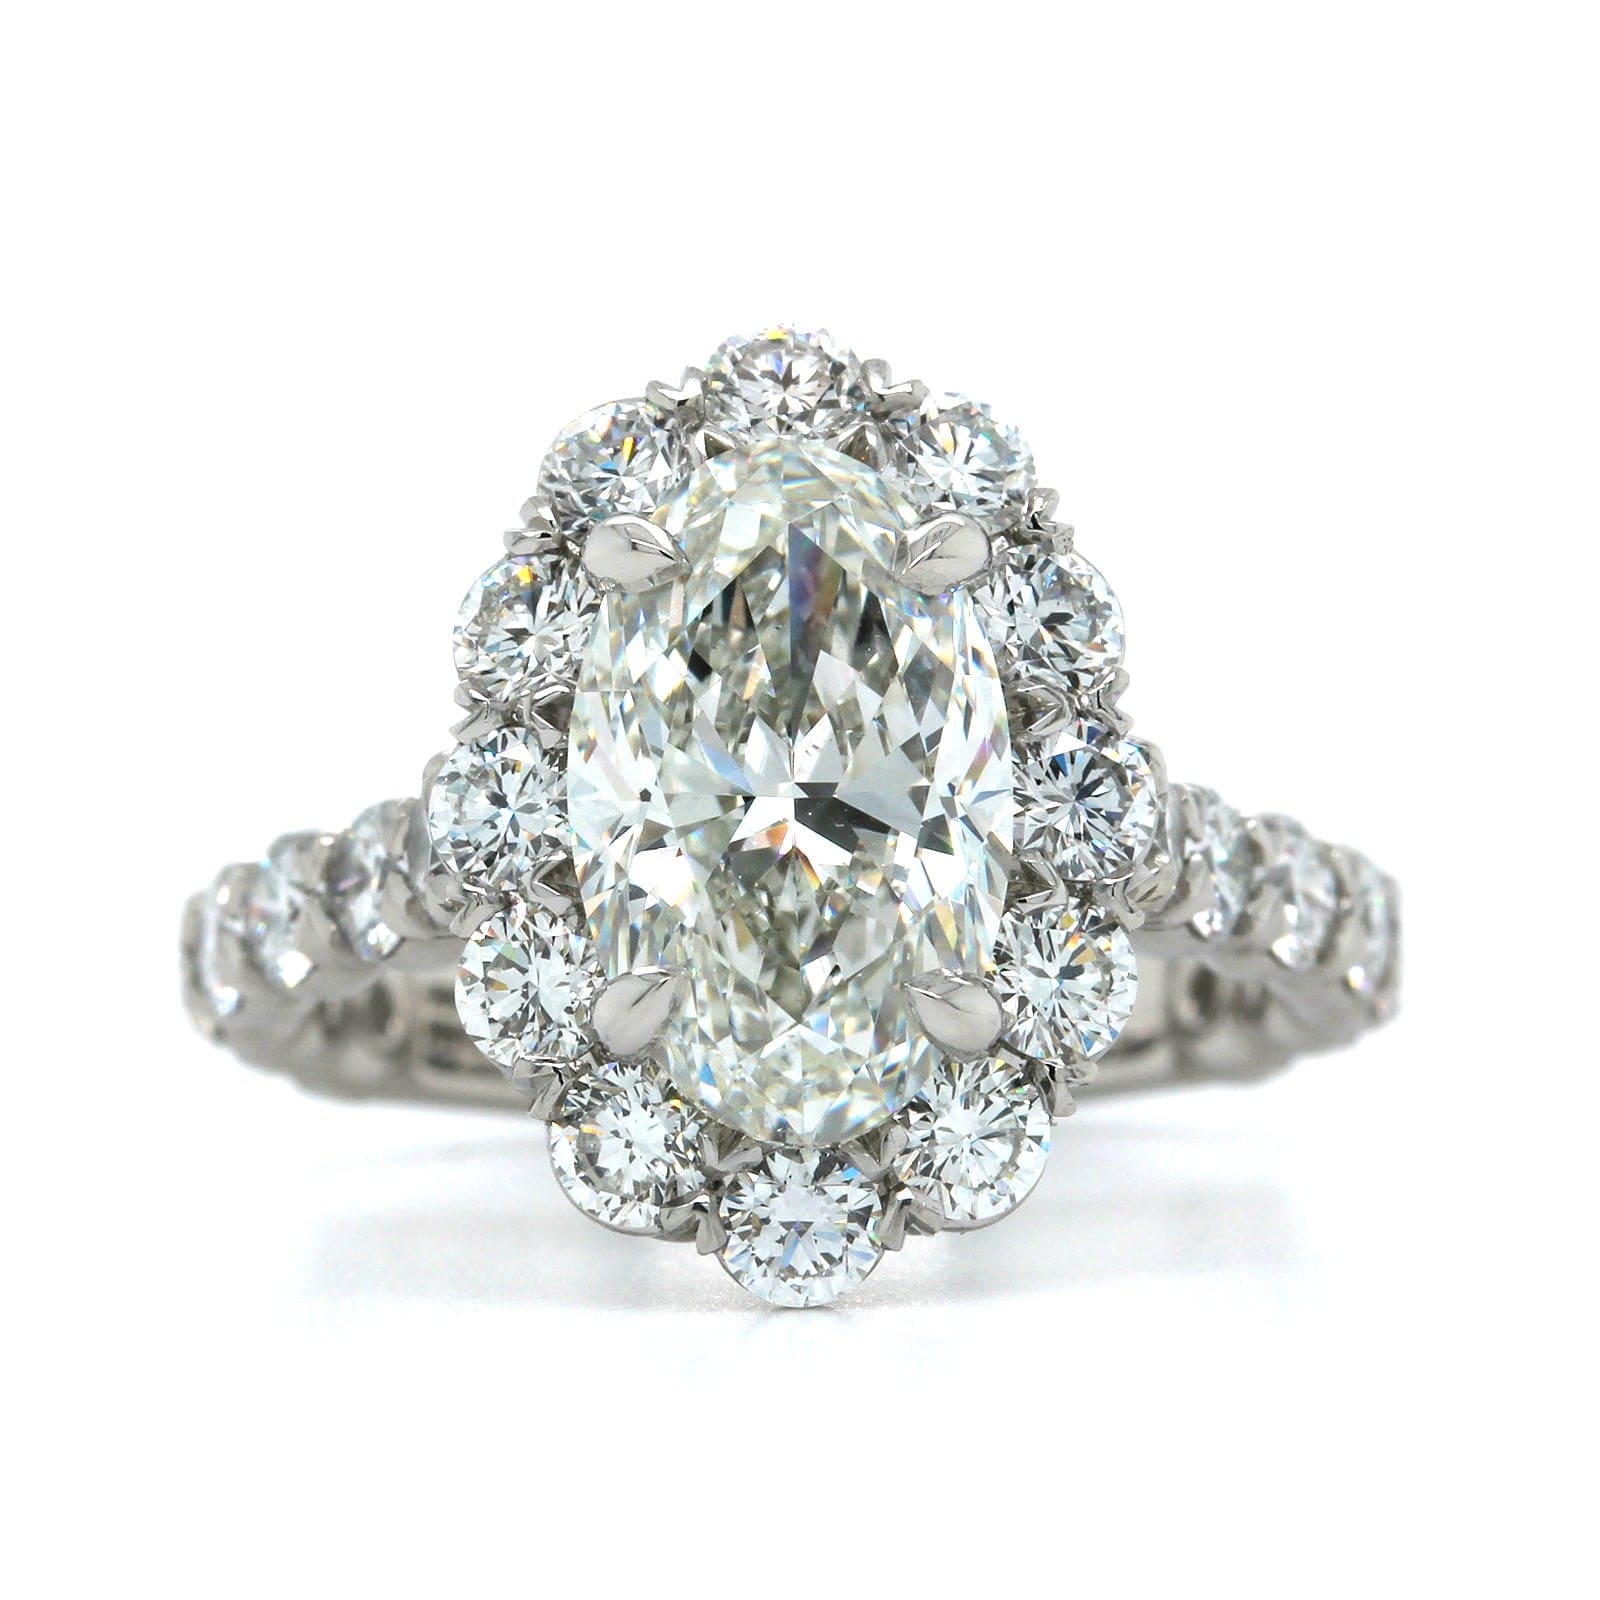 Platinum Oval Cut Diamond Engagement Ring